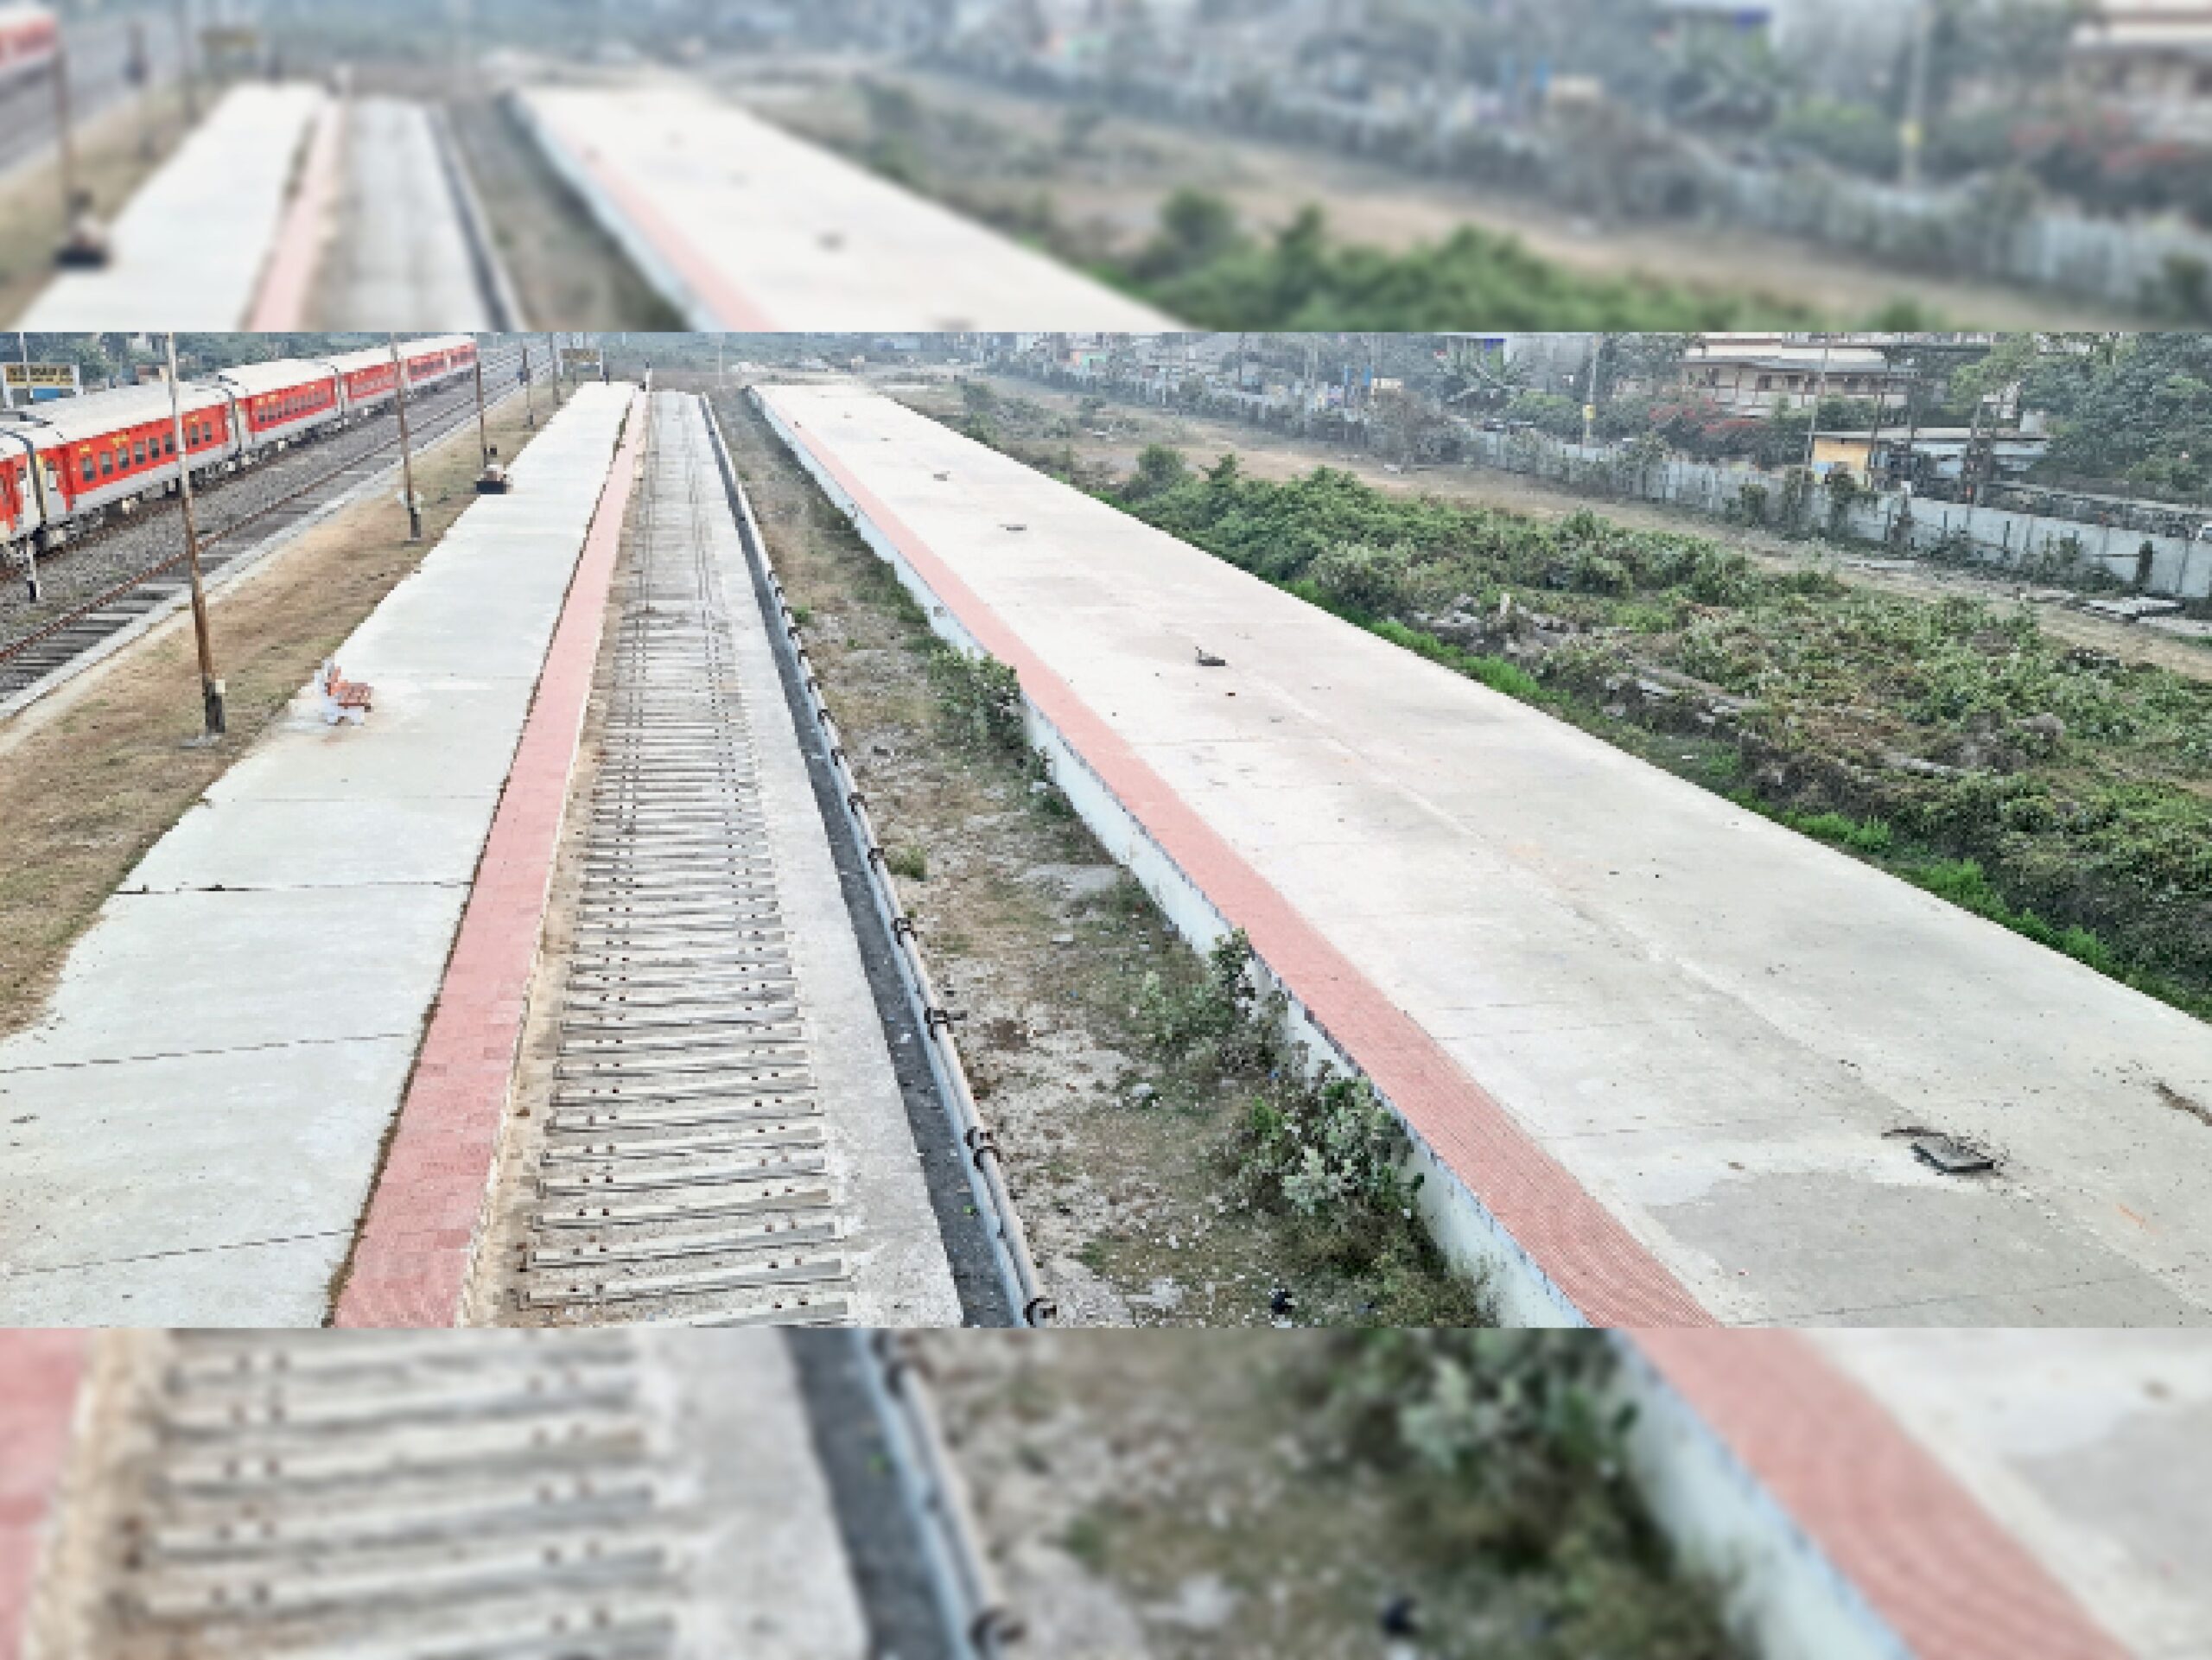 Forbesganj-Saharsa railway line